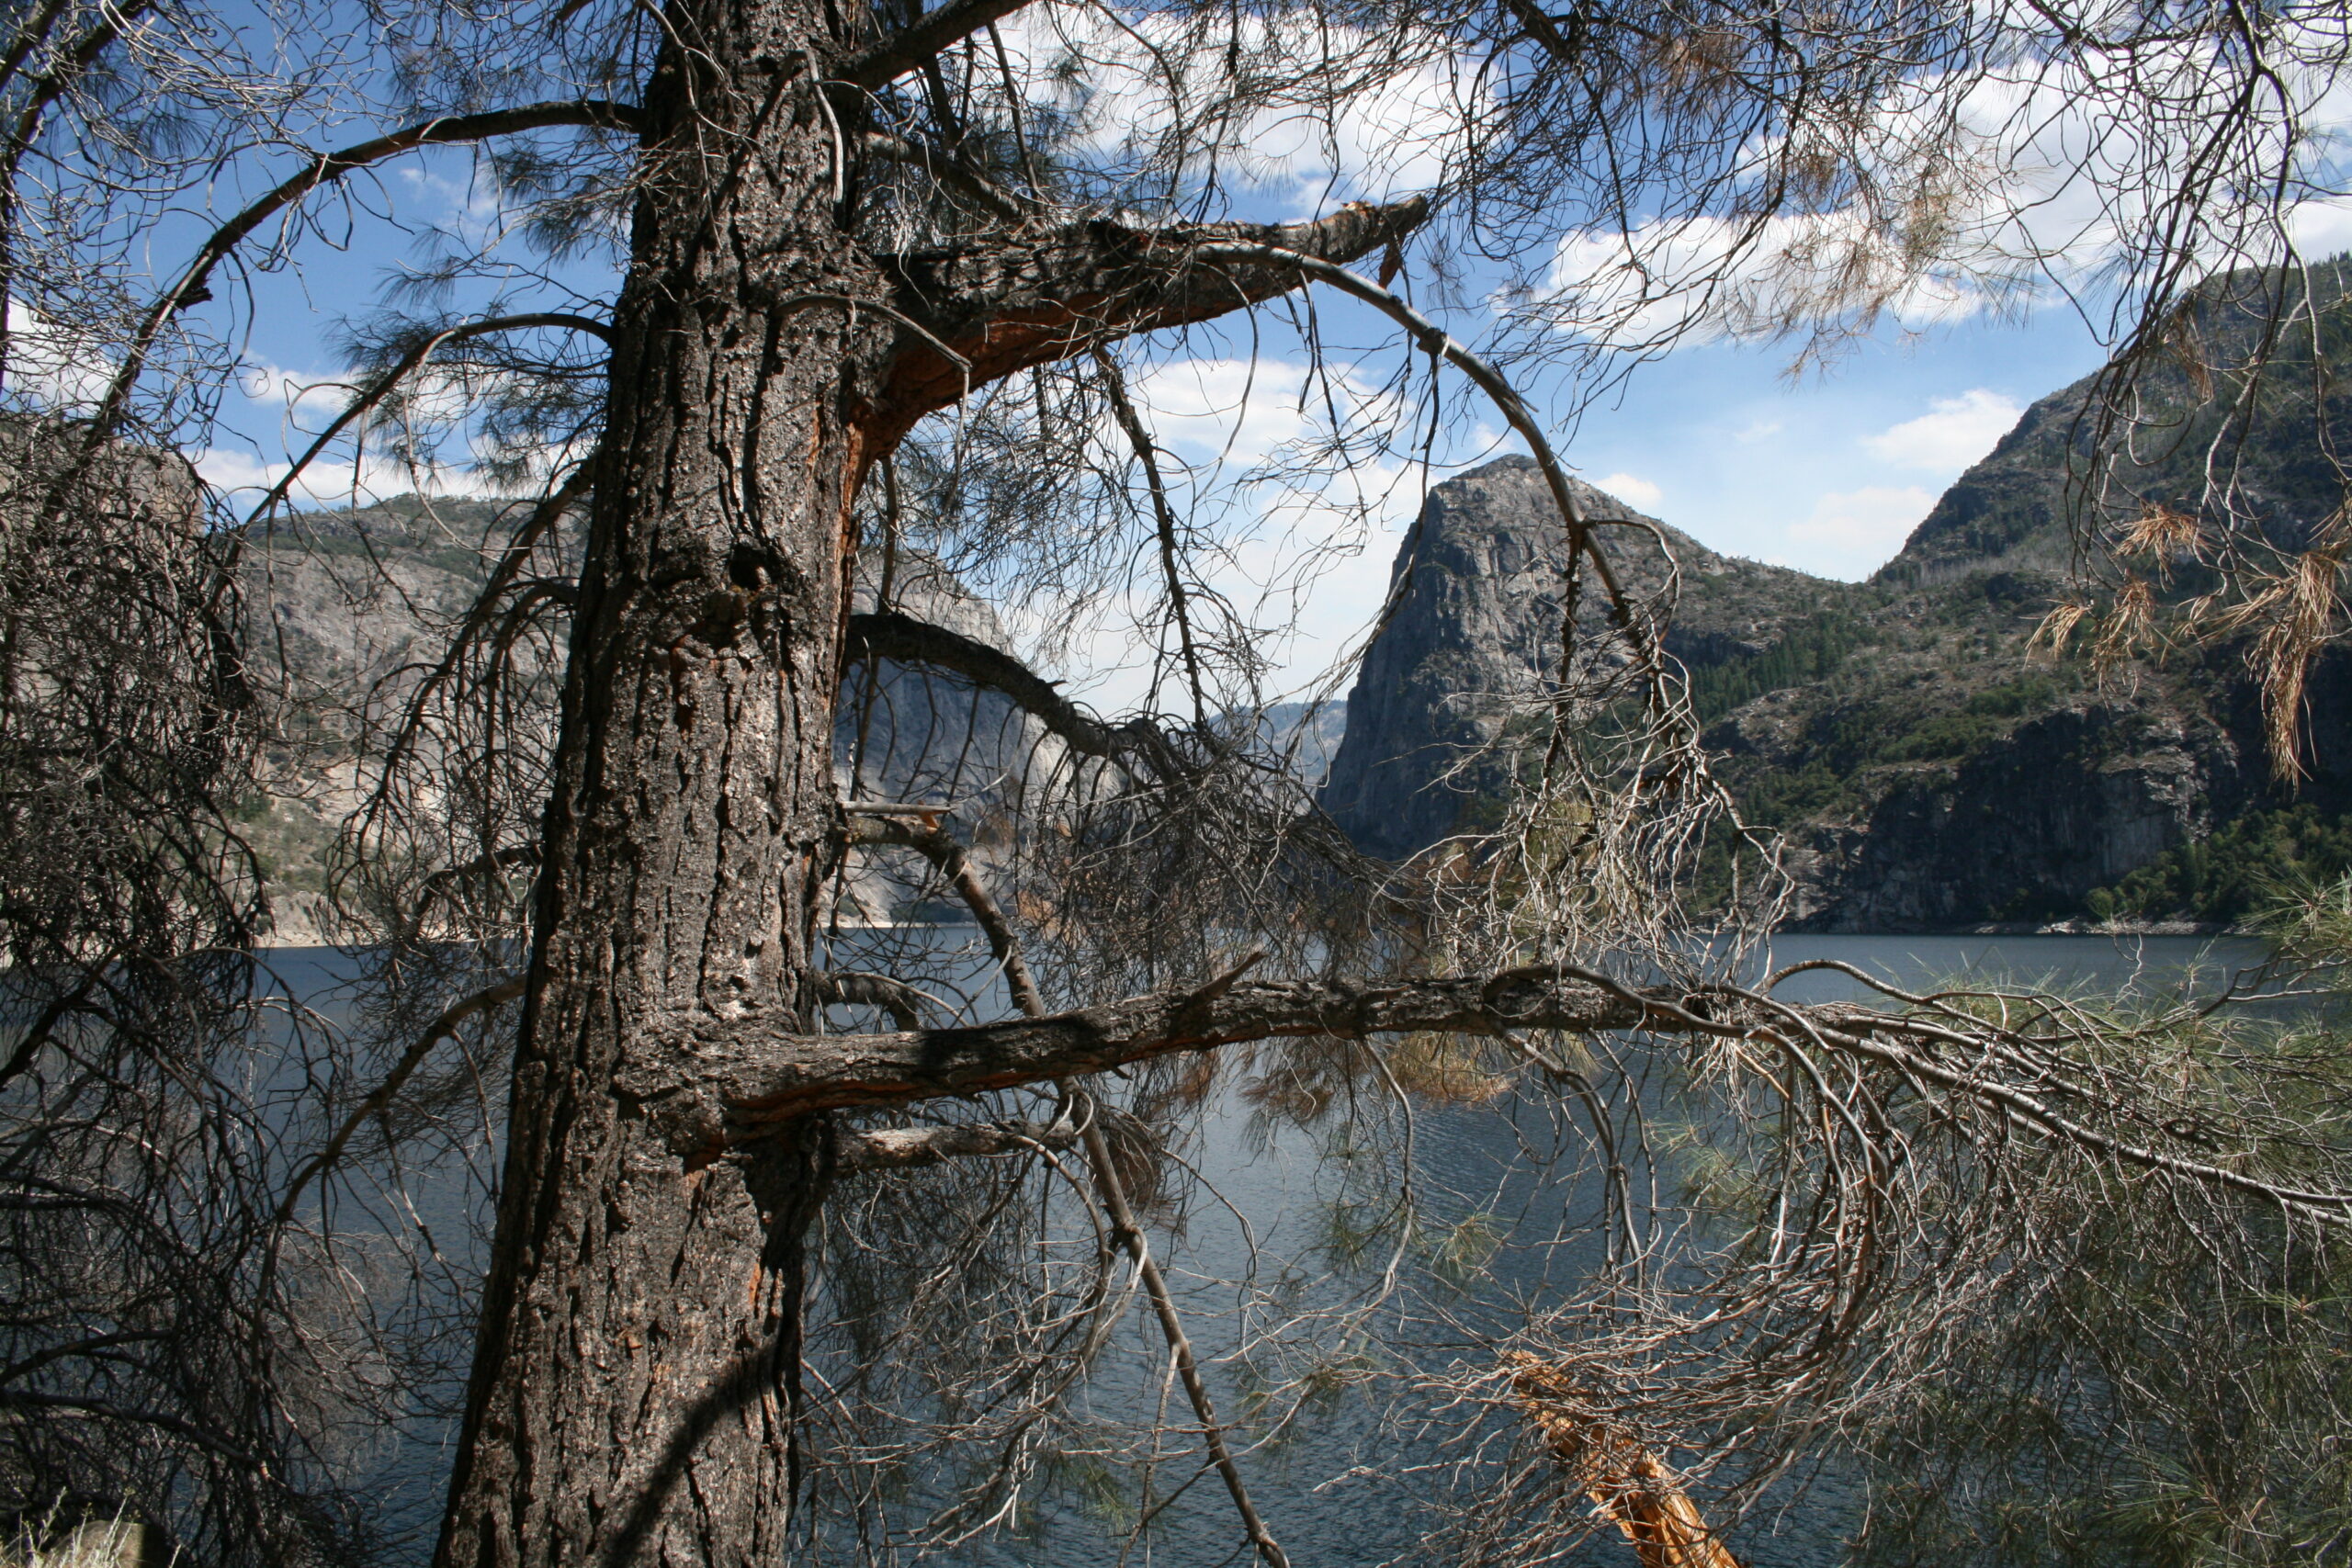 Hetch Hetchy reservoir view with tree